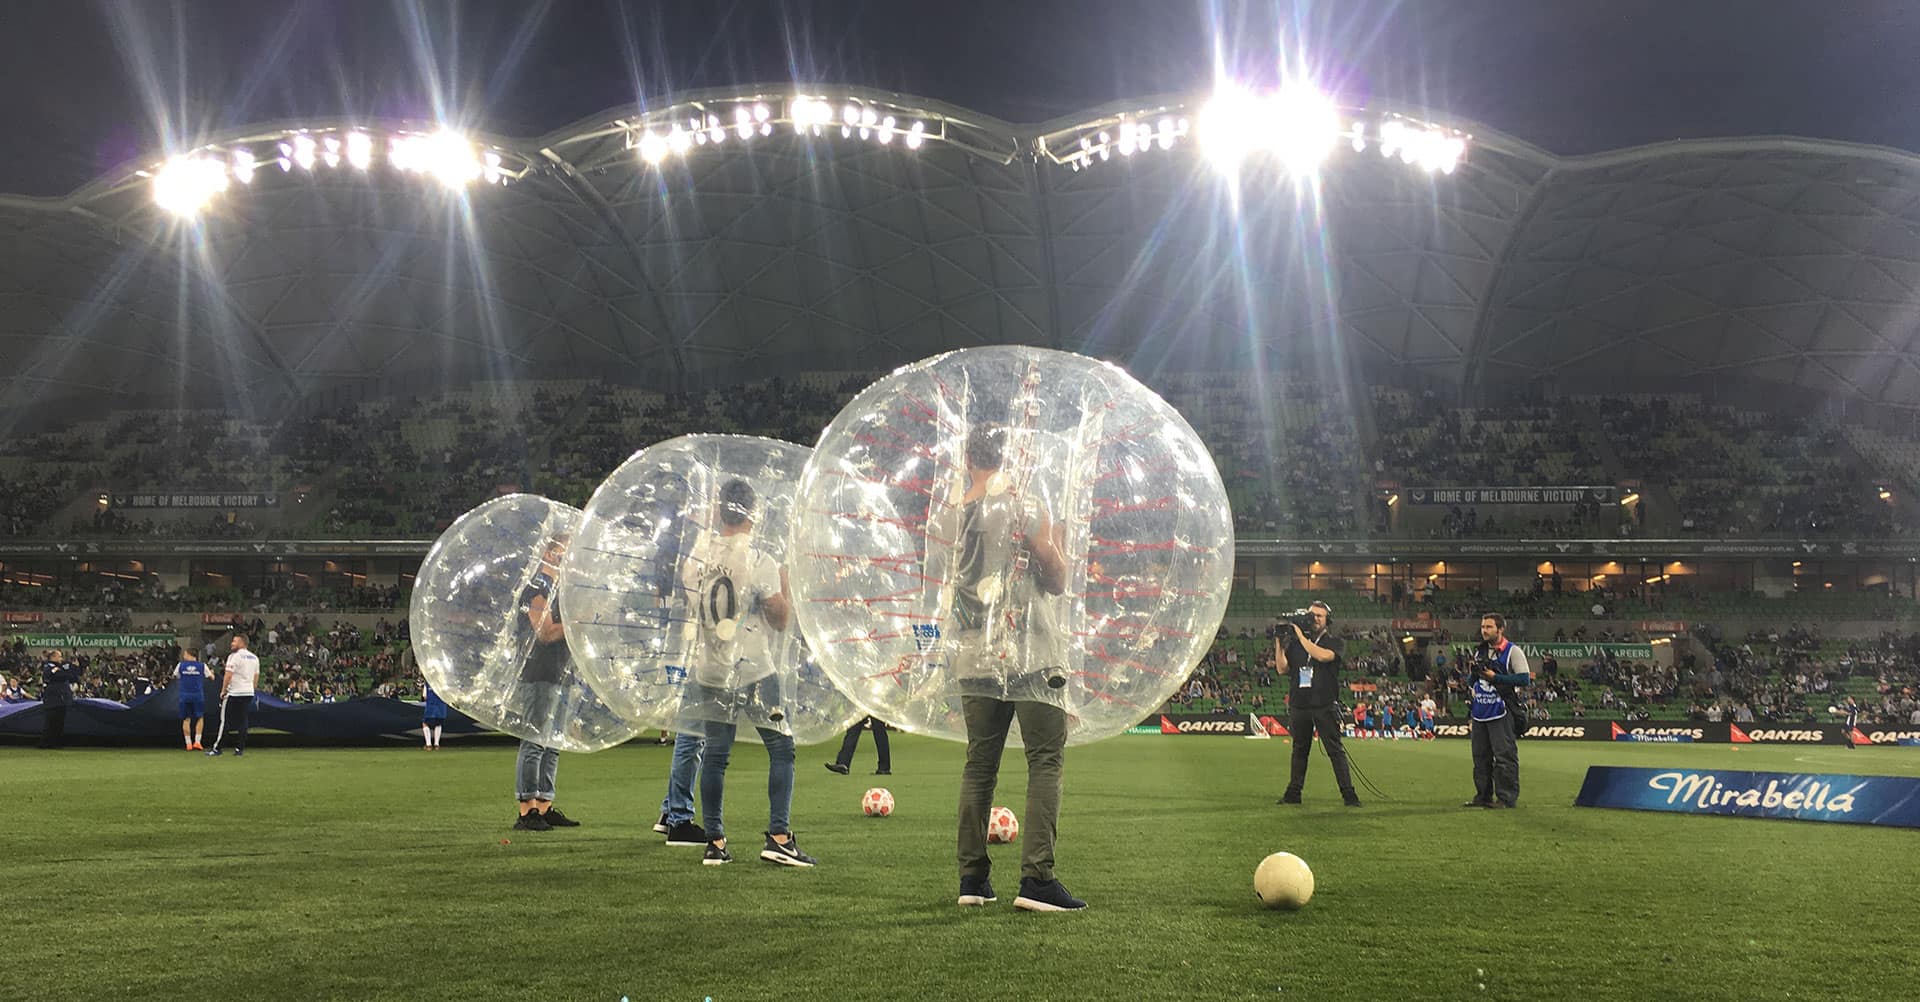 Ultimate Bubble Soccer